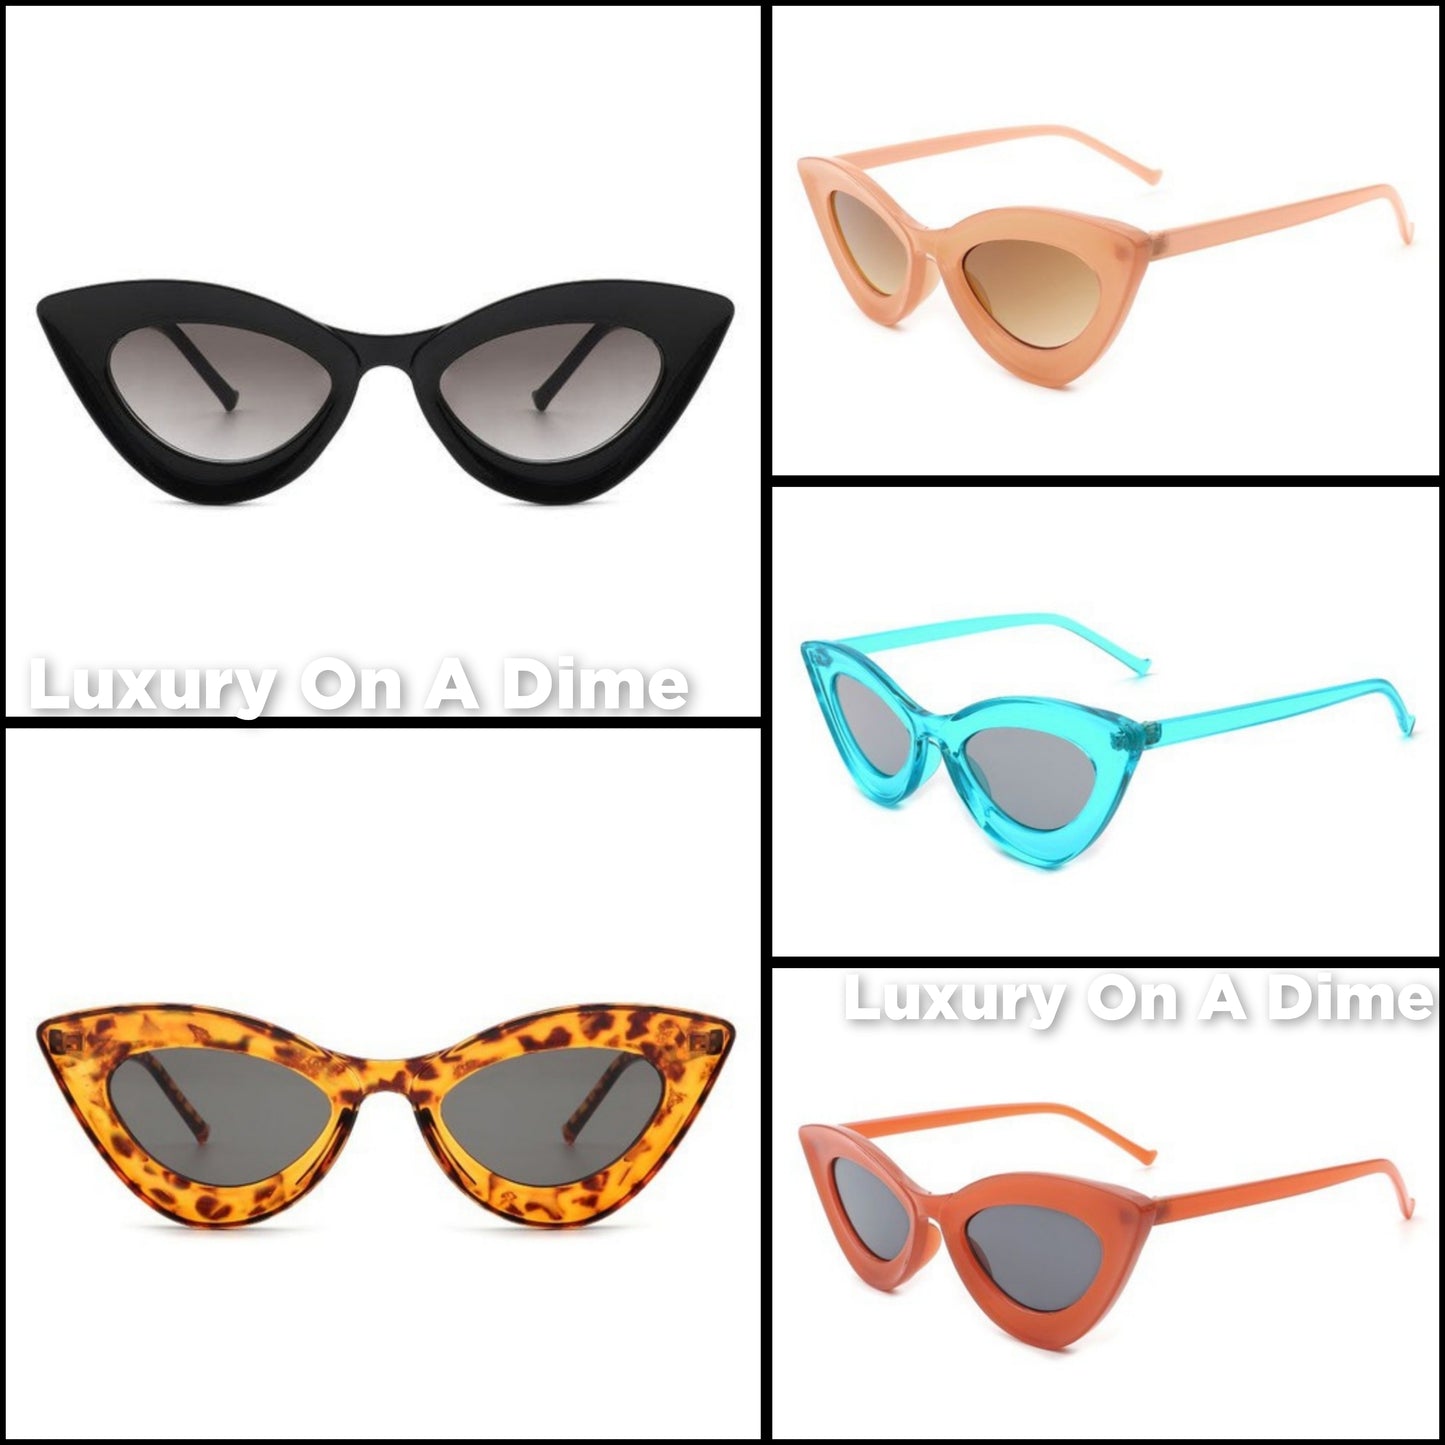 Retro 50s Cat Eye Women's Sunglasses UVA UVB Eye Protection Case Included